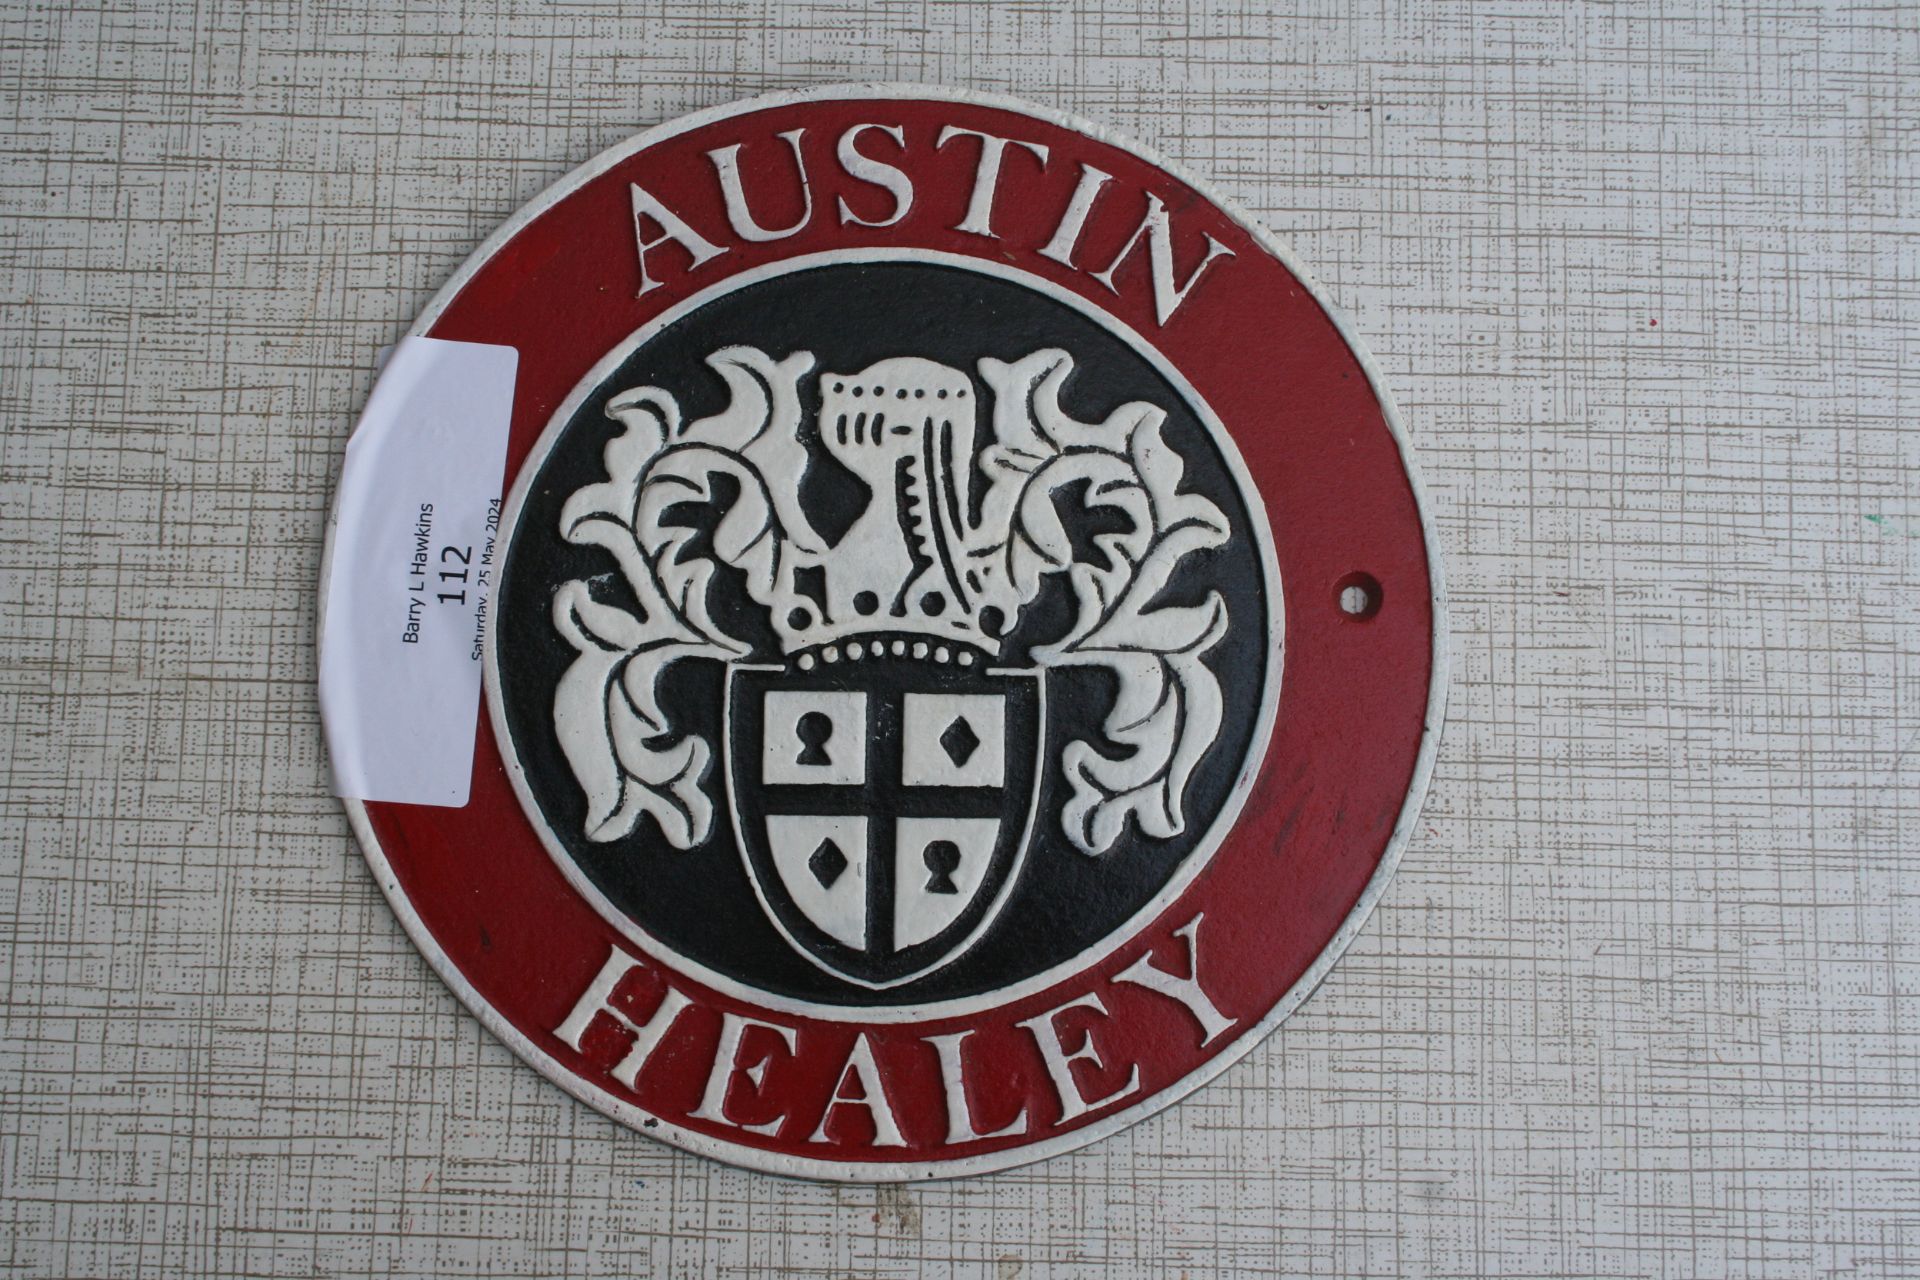 Austin Healey plaque